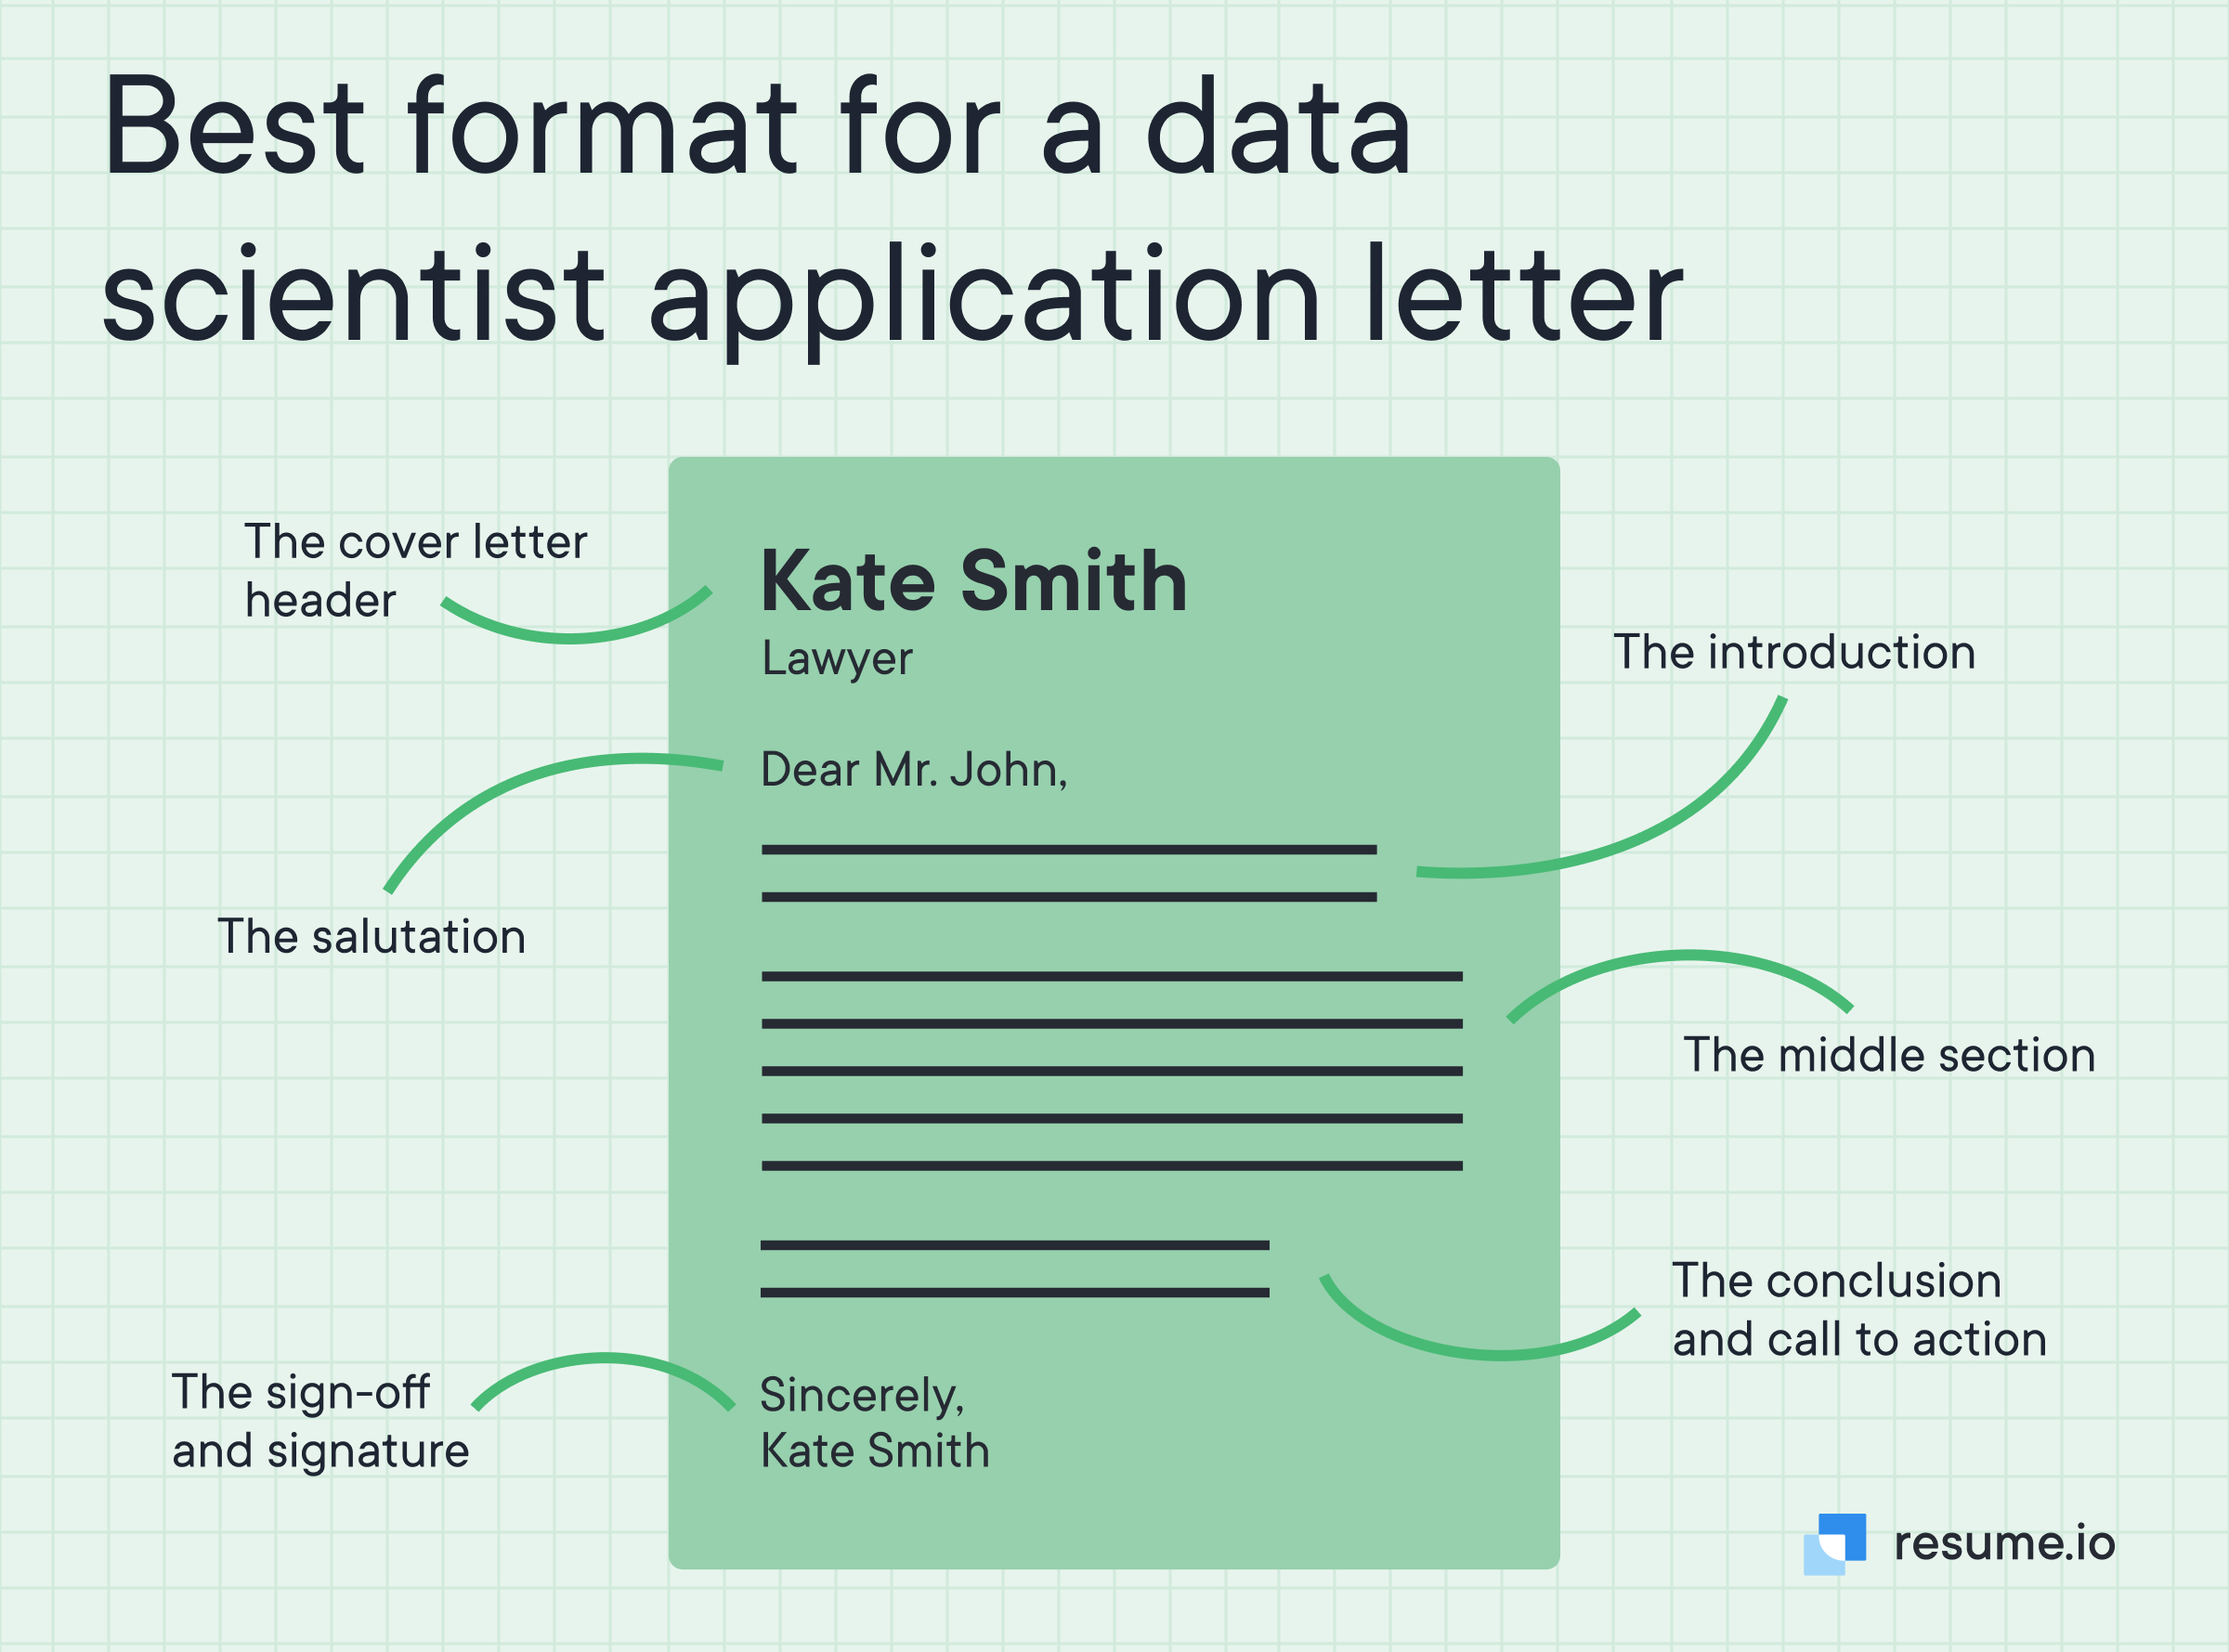 Best format for a data scientist application letter.